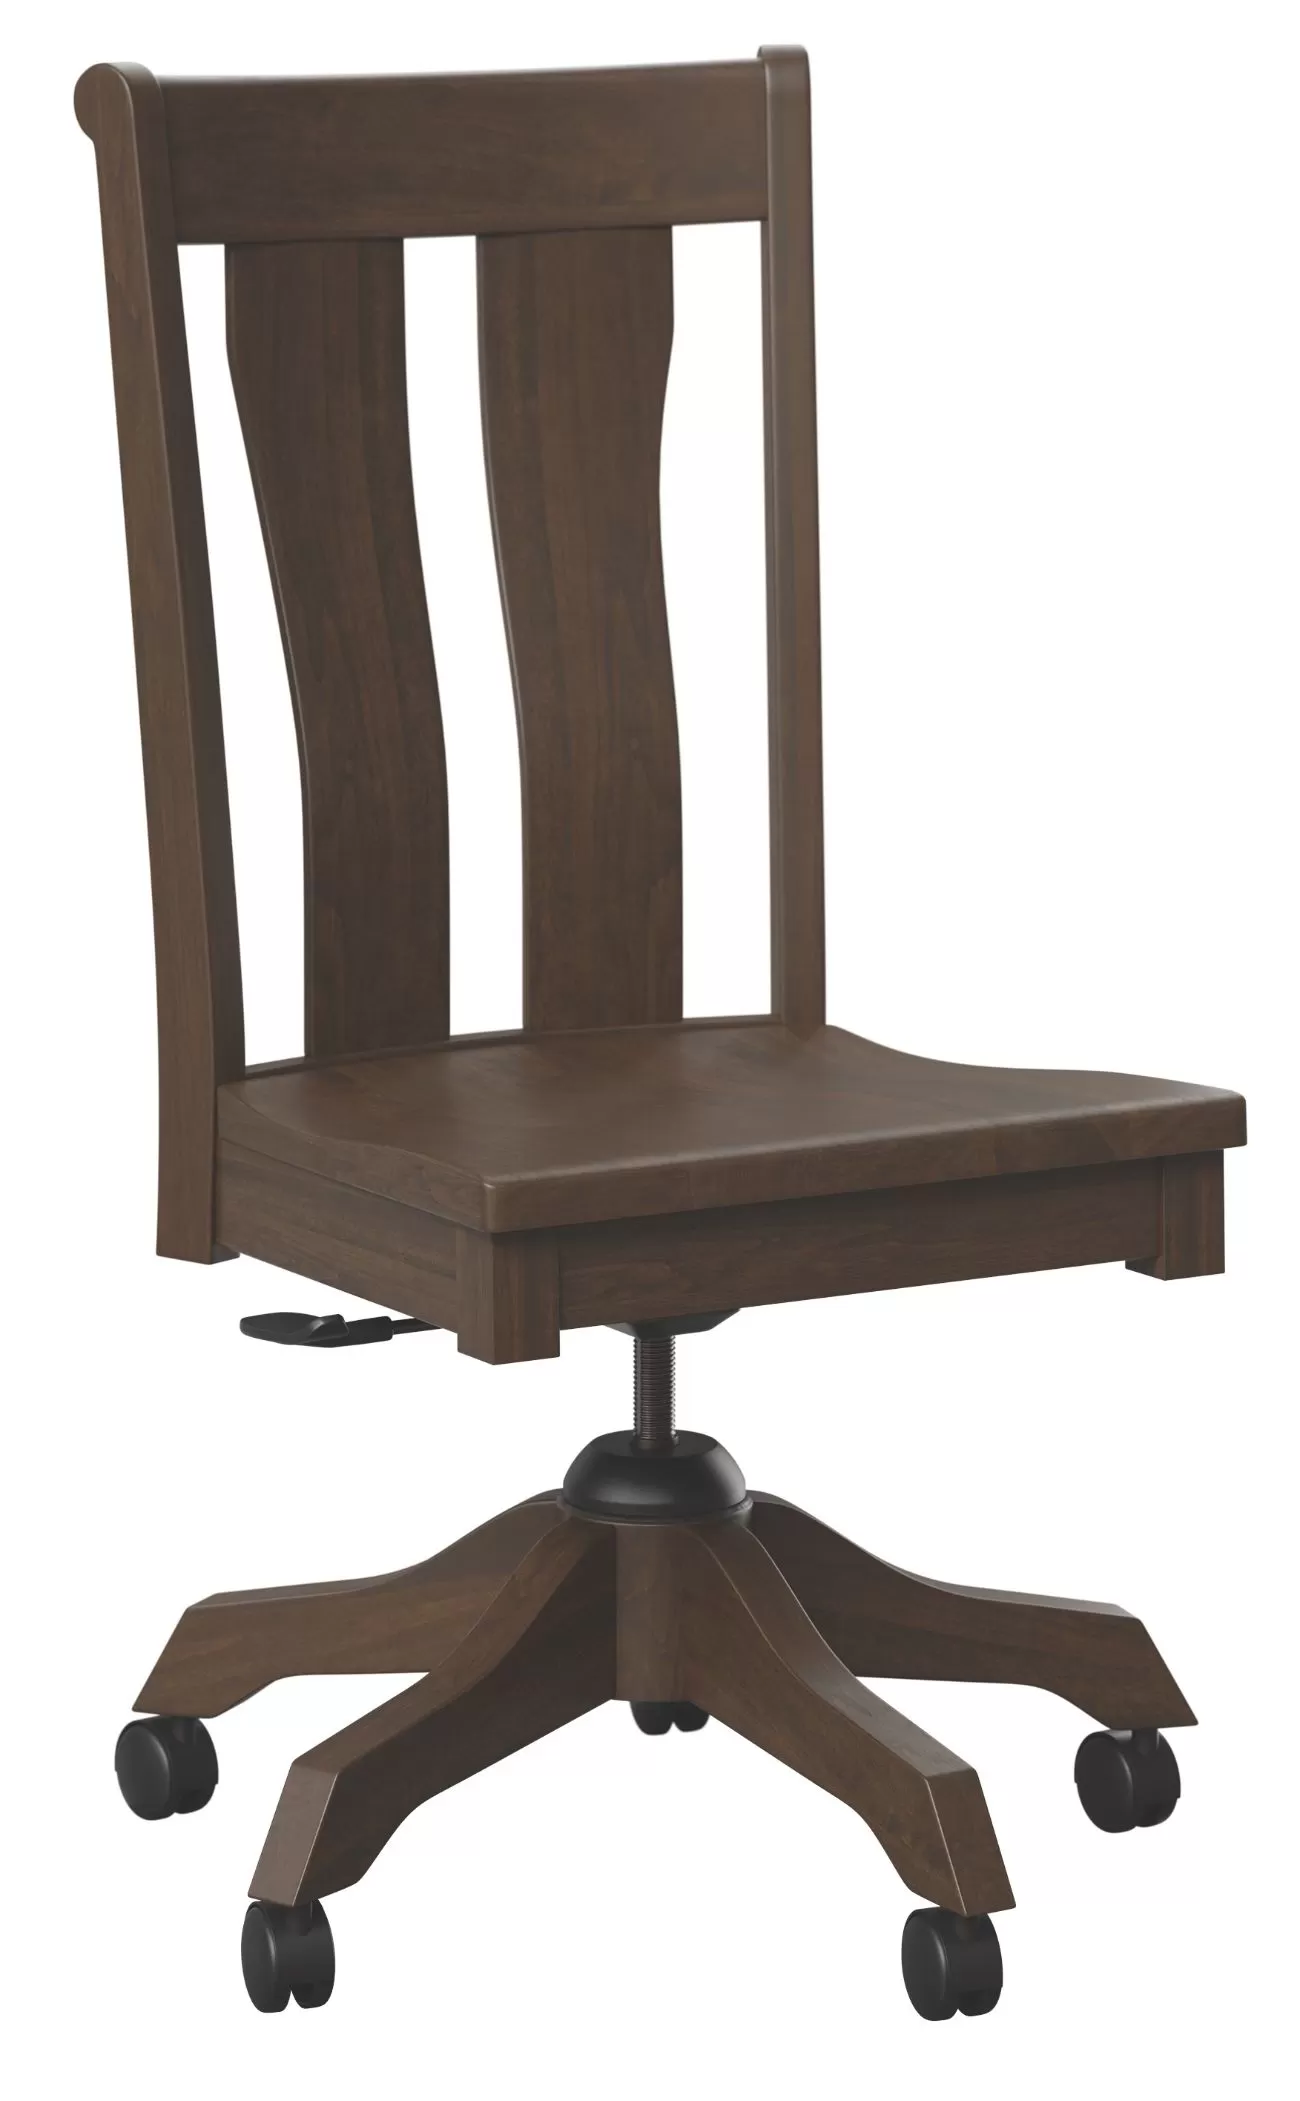 Collin side desk chair